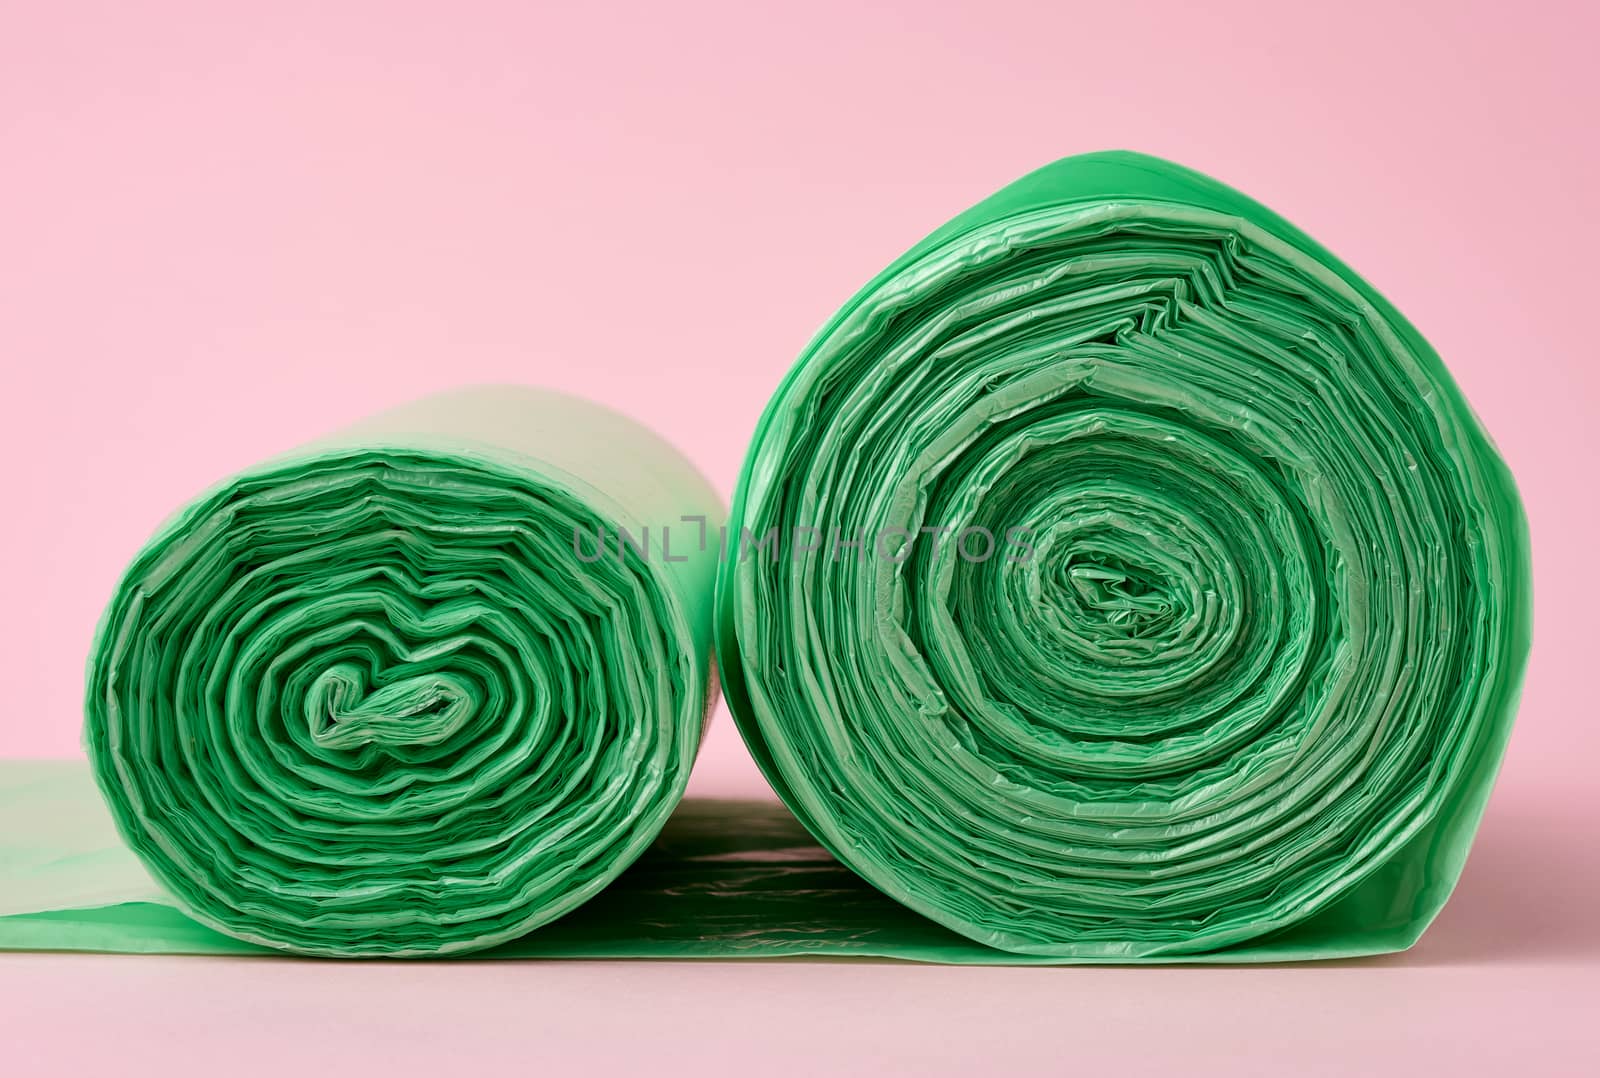 two rolls green plastic bags for trash bin on pink background by ndanko